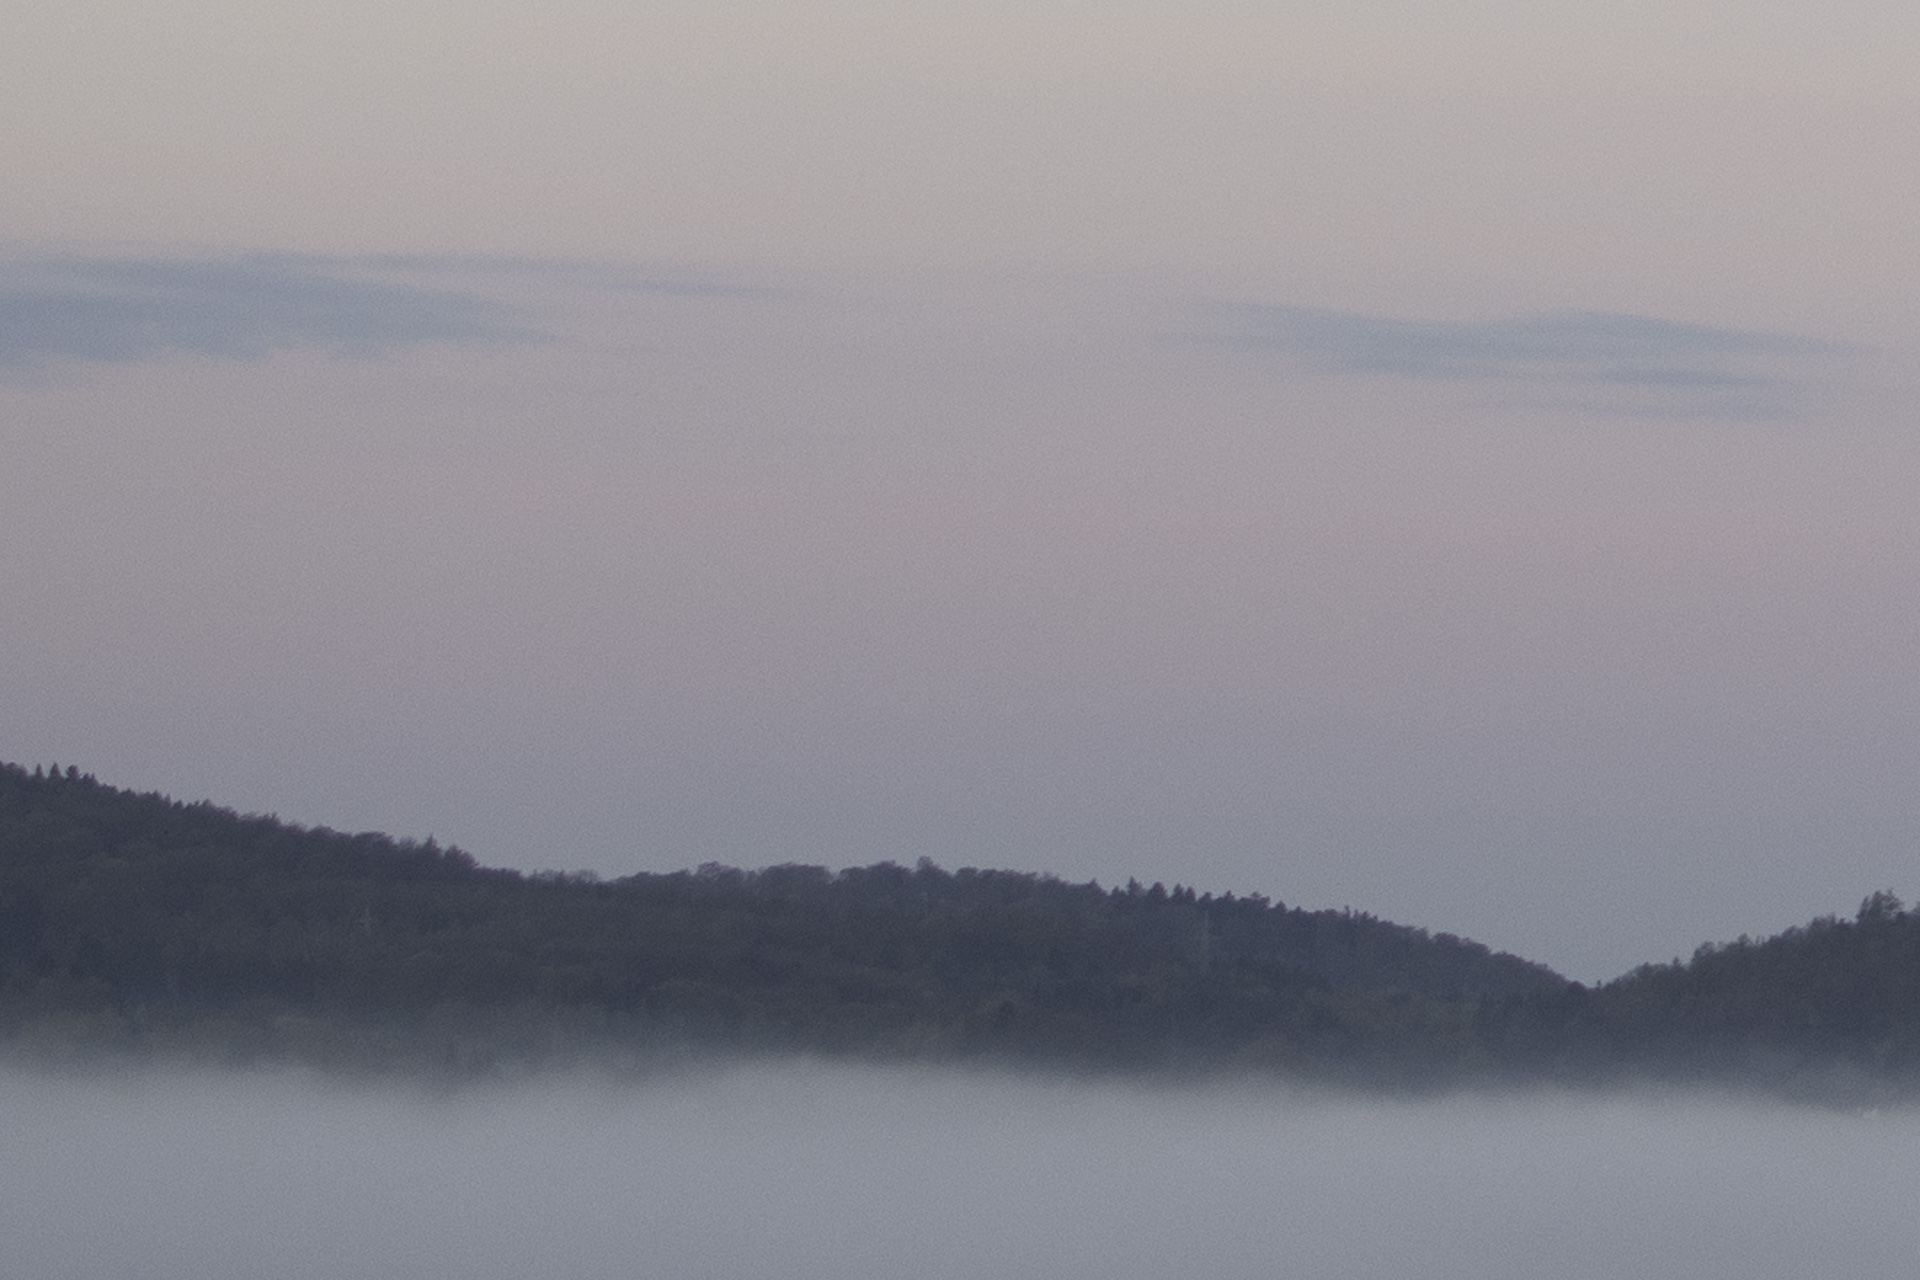 Februar Morgenstimmung – zartrose Himmel über Bergkamm und Nebelschwaden im Tal davor